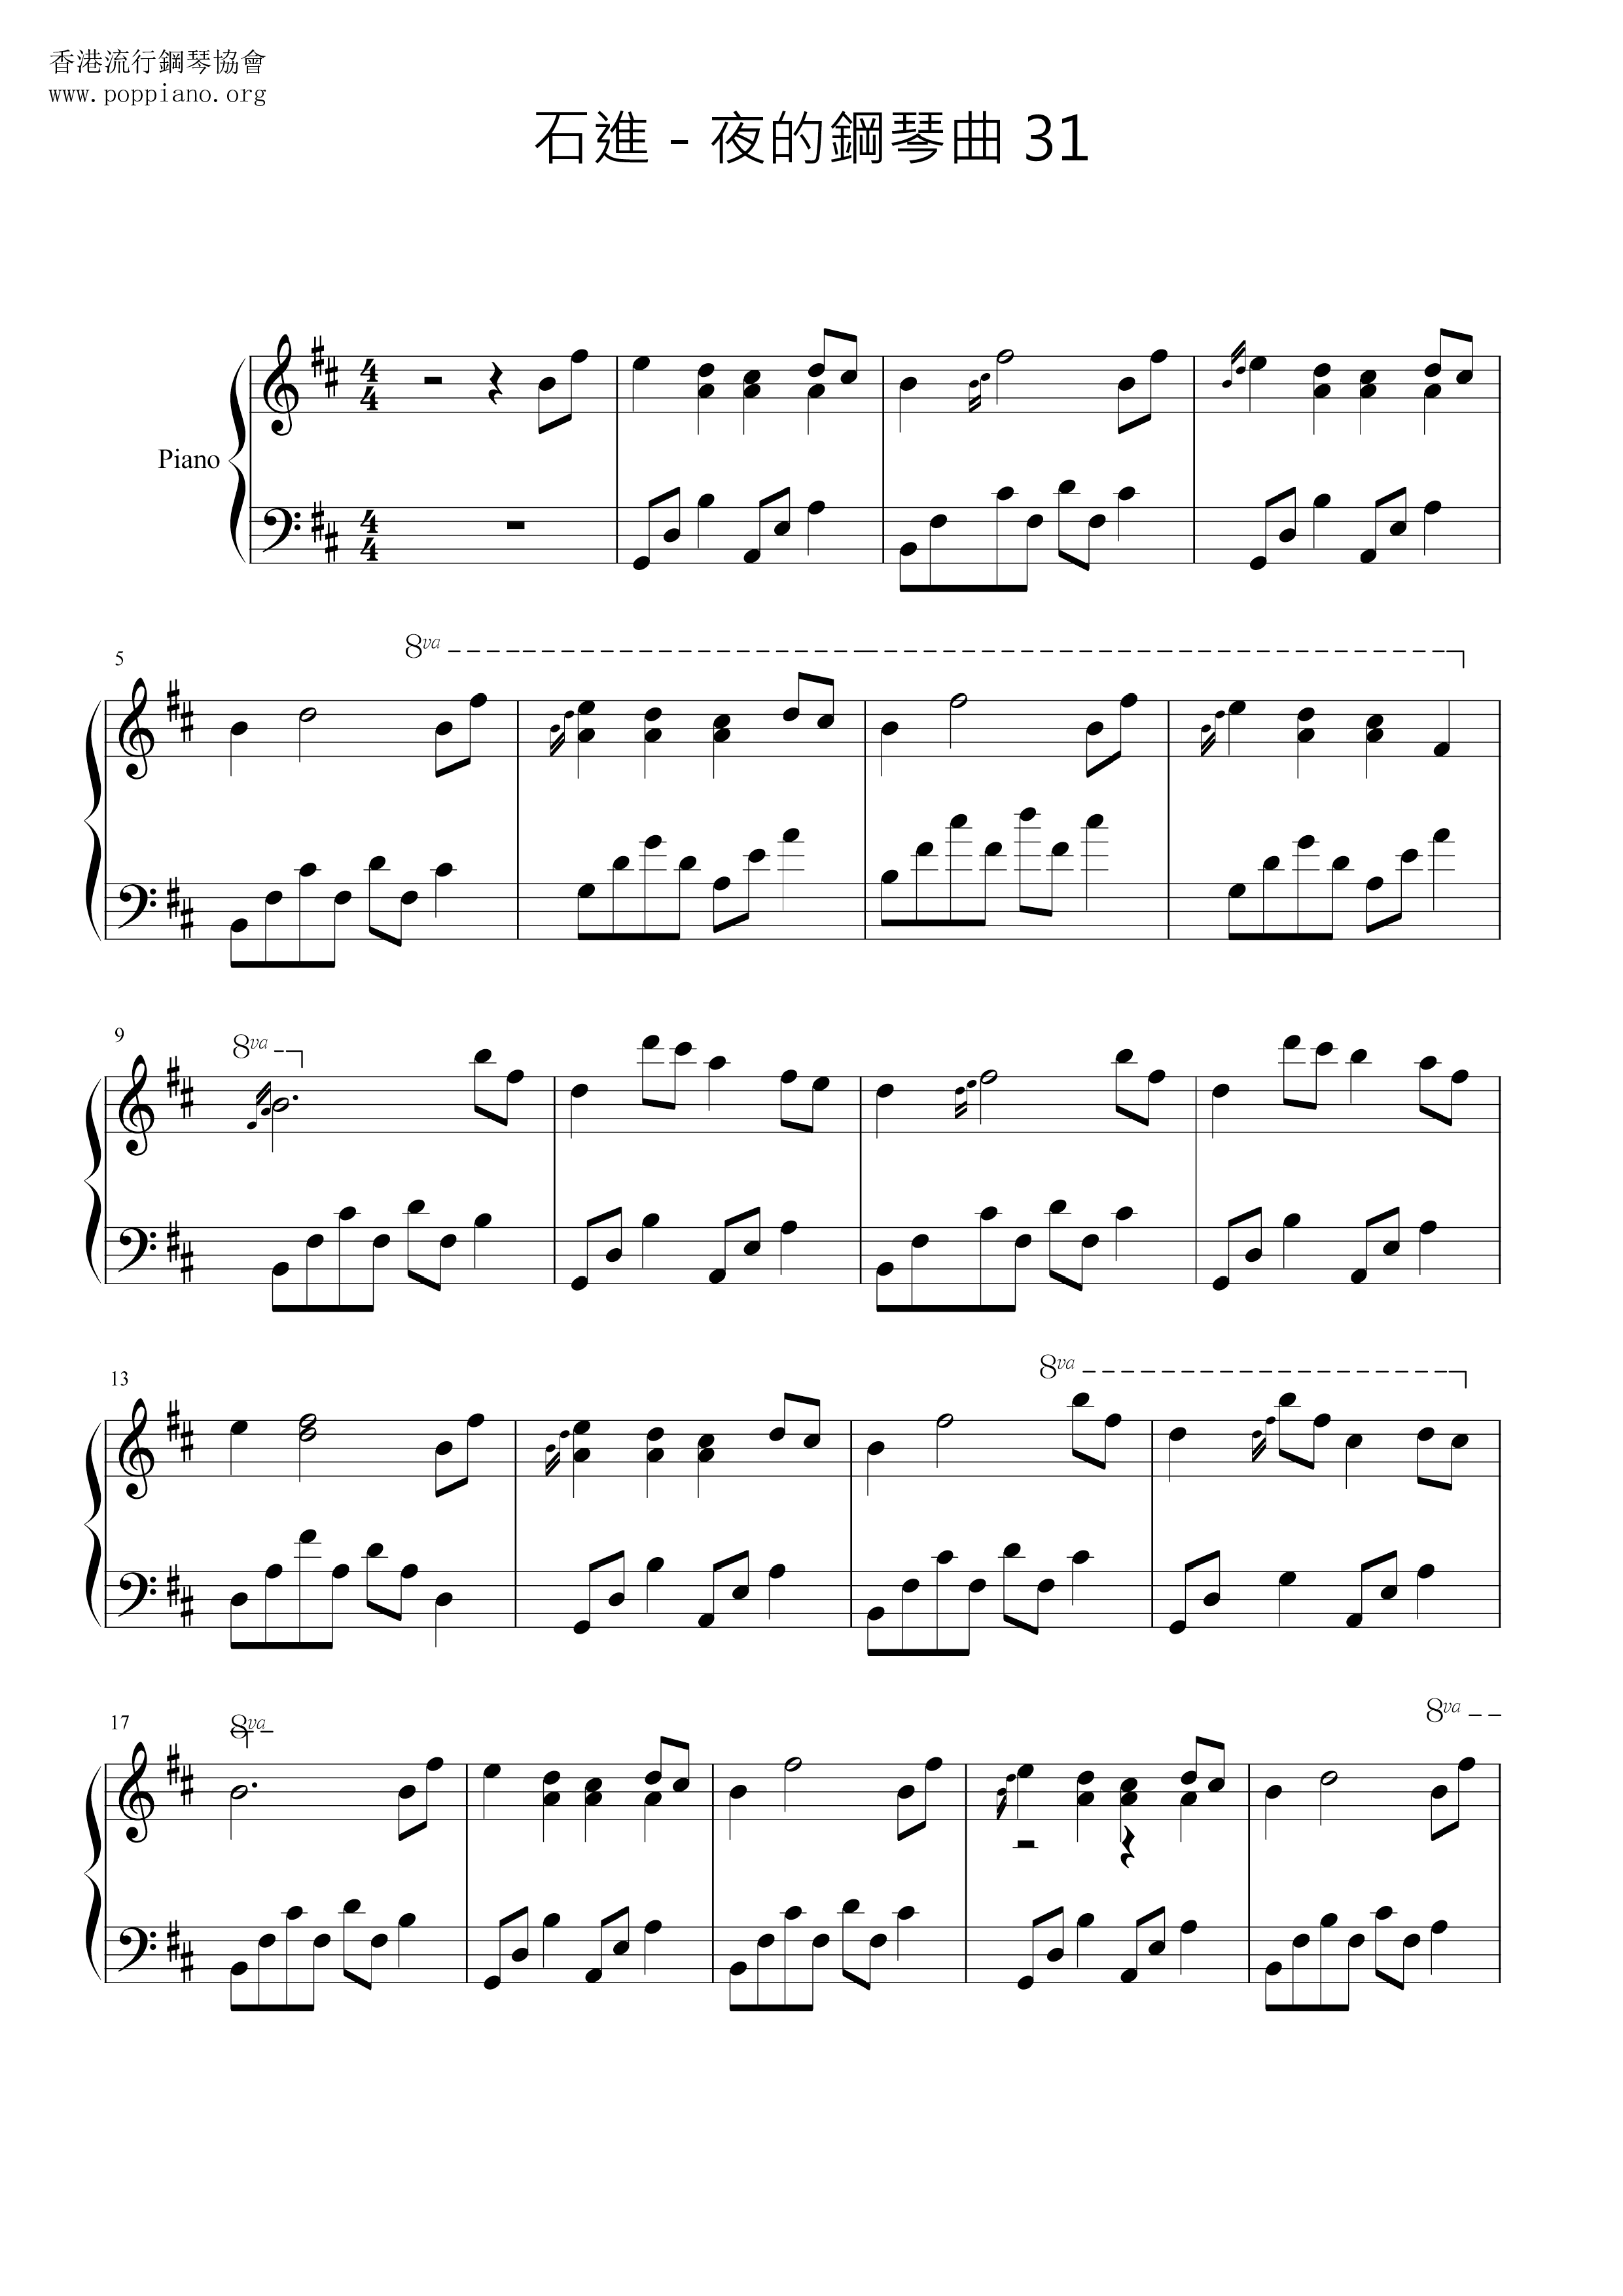 Melody Of The Night 31 Score